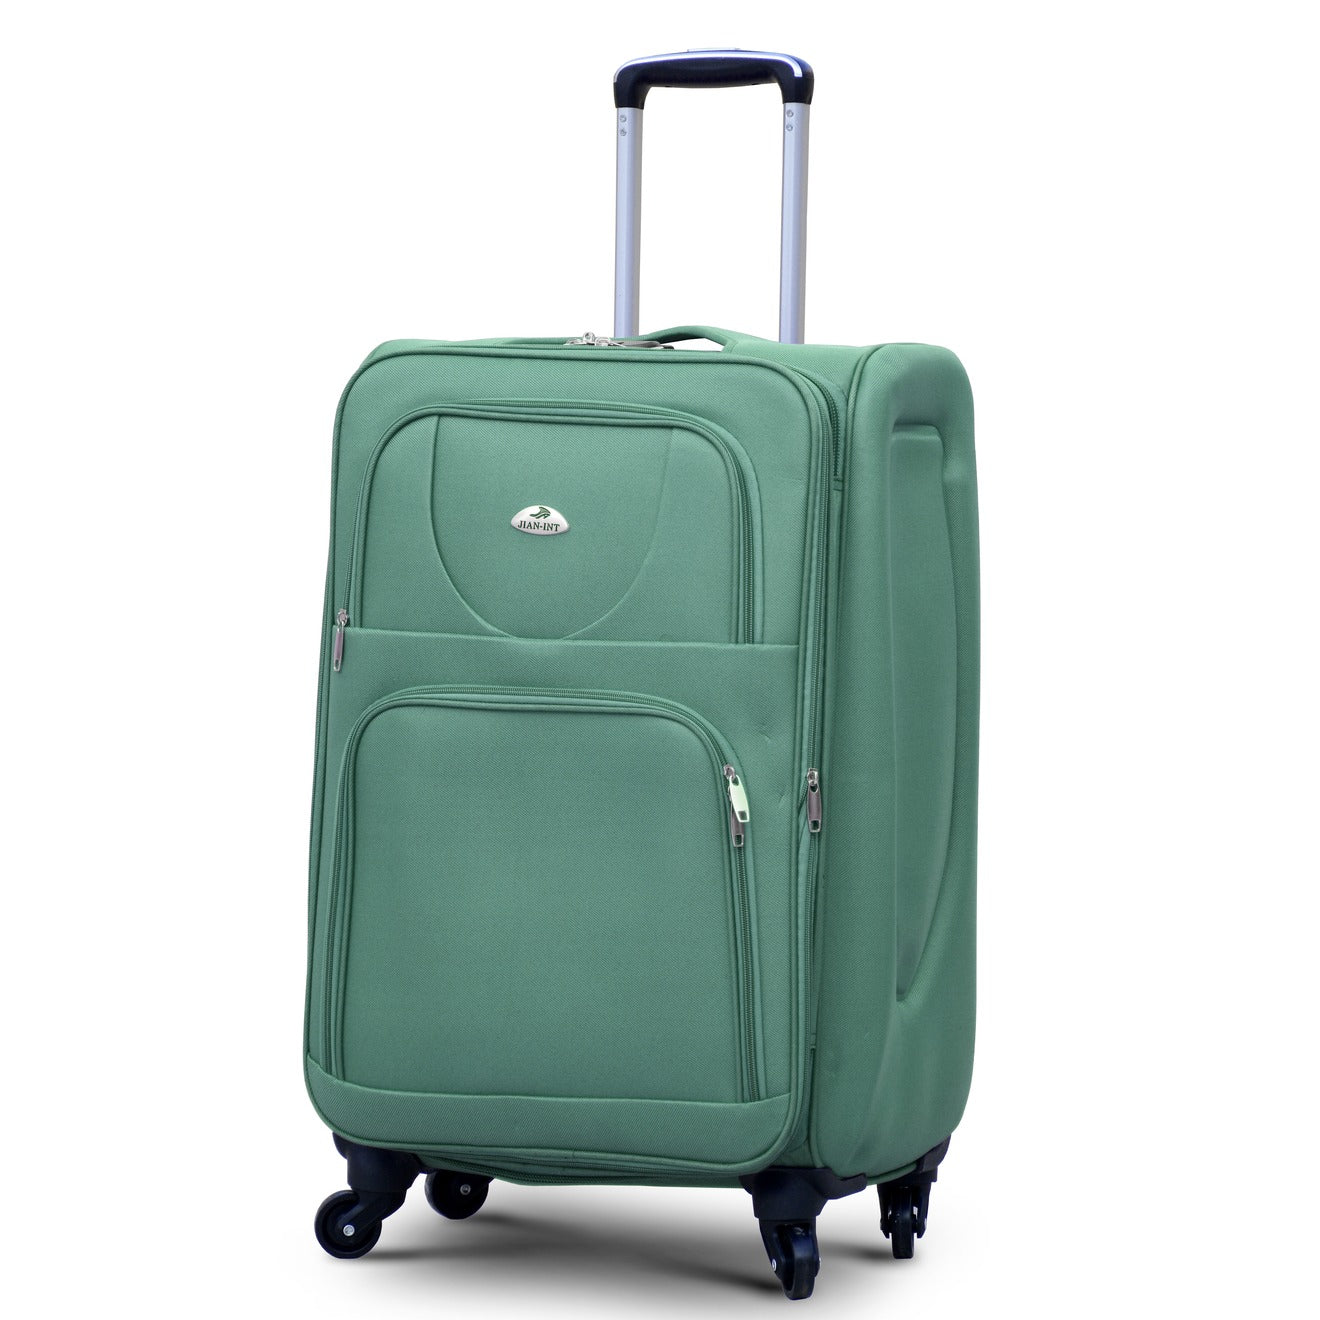 28" SJ JIAN 4 Wheel Lightweight Soft Material Luggage Bag